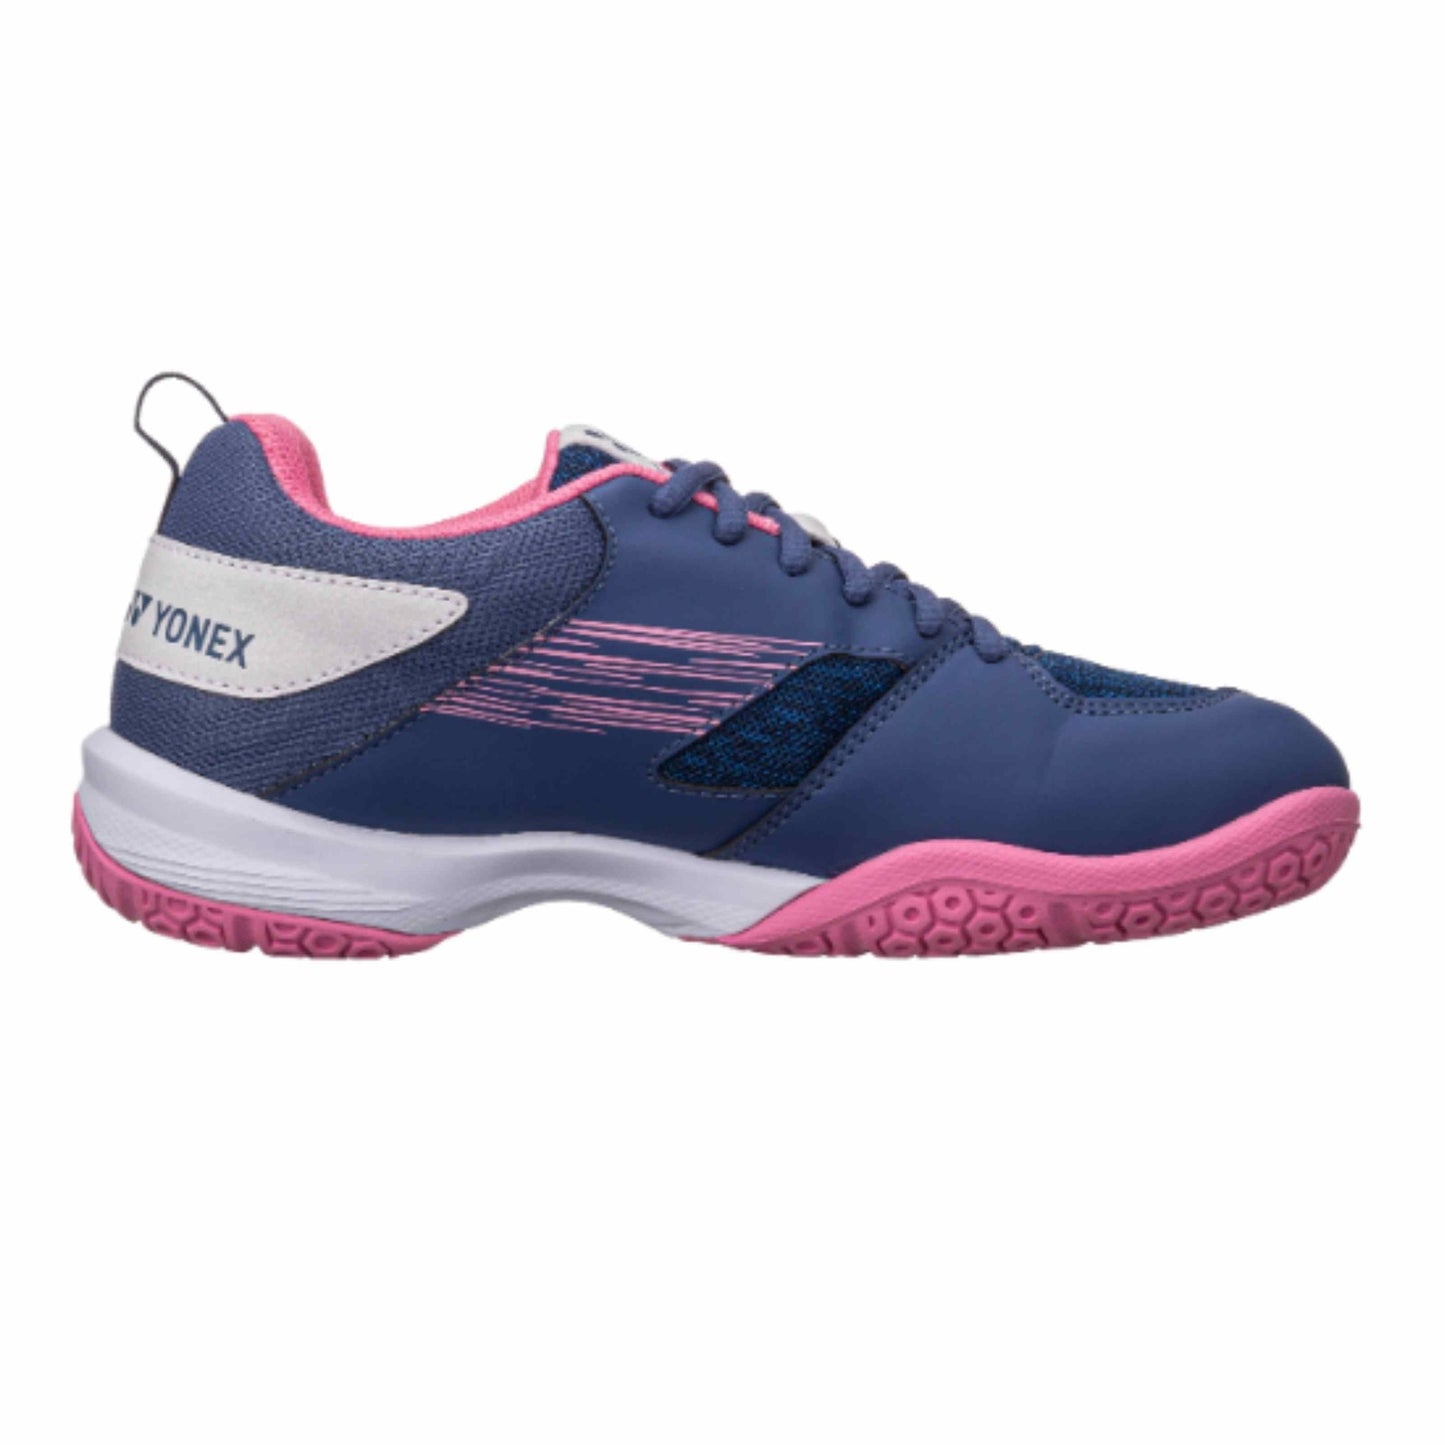 Yonex Power Cushion 37 Badminton Shoe (Navy/Pink)